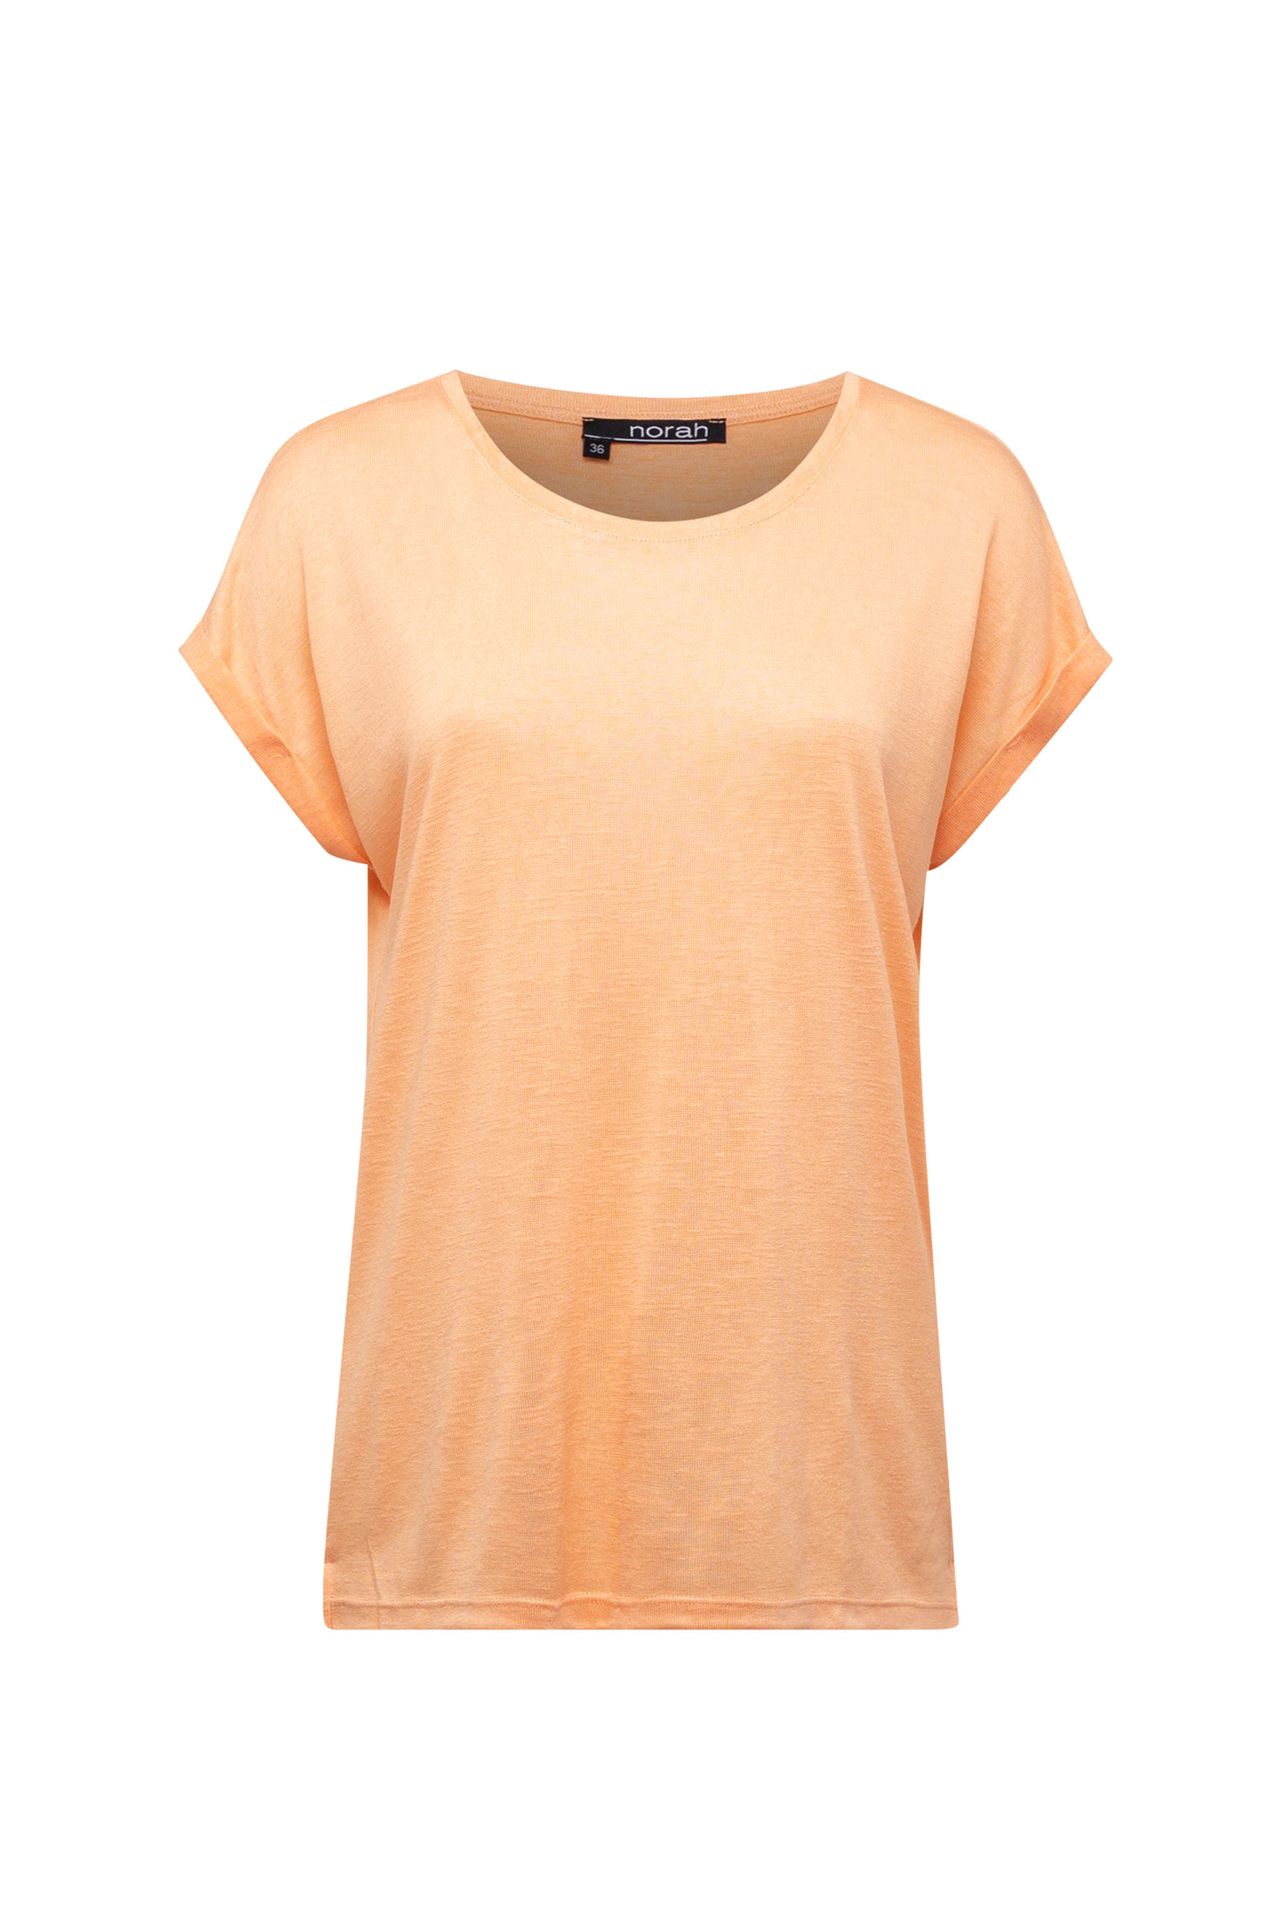 Norah Shirt abrikoos apricot 211185-702